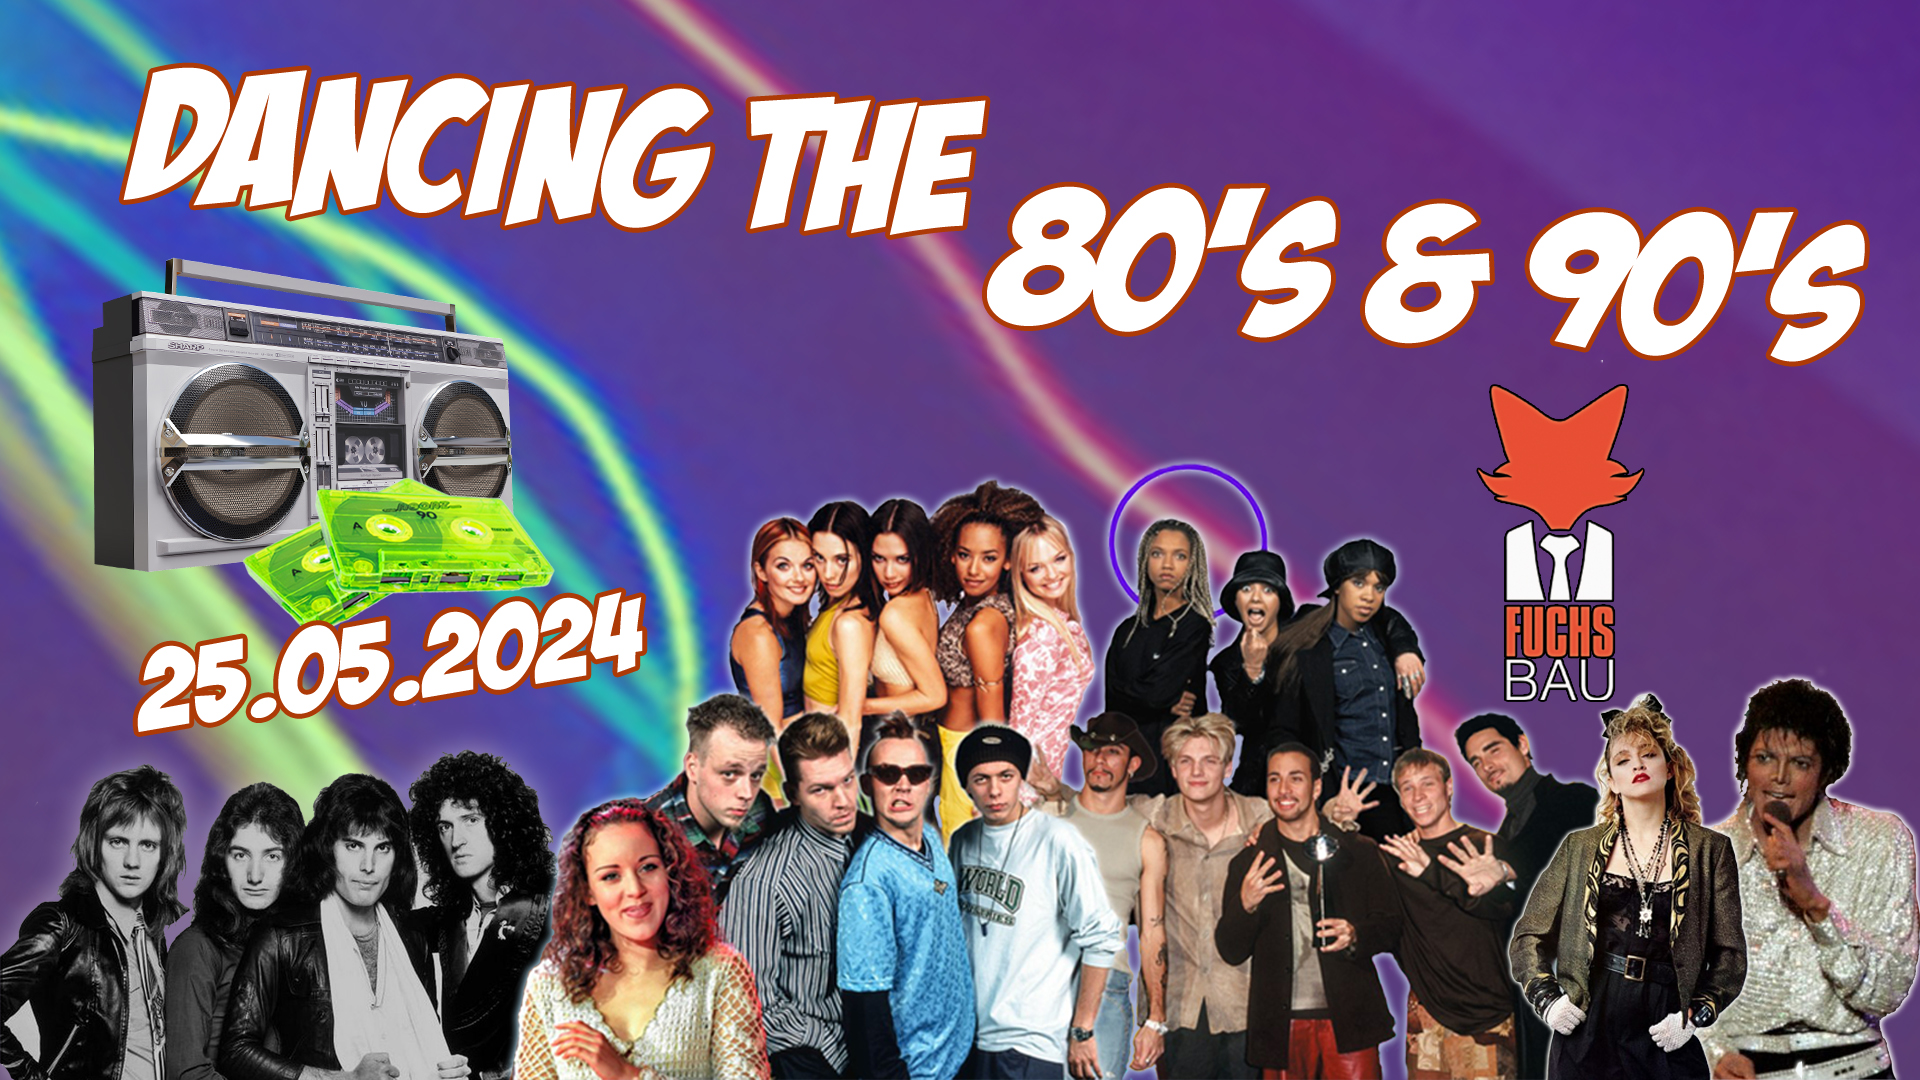 25.05.2024 Dancing the 80s & 90s